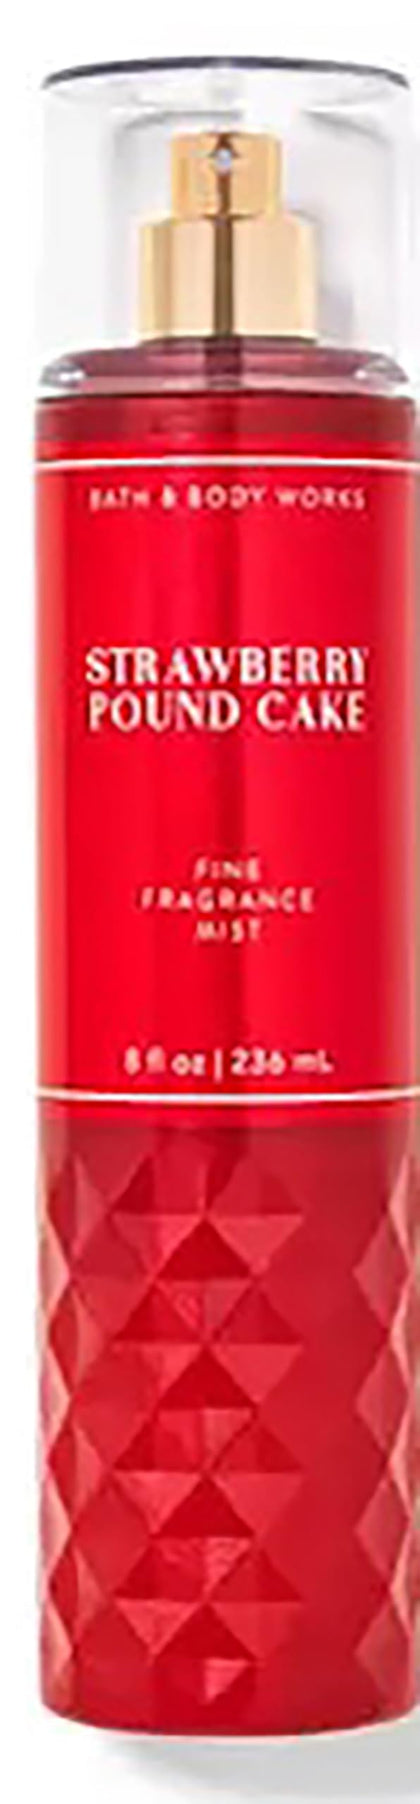 Bath & Body Works Fine Fragrance Body Spray Mist 8 fl oz / 236 mL (Strawberry Pound Cake) Packaging Varies